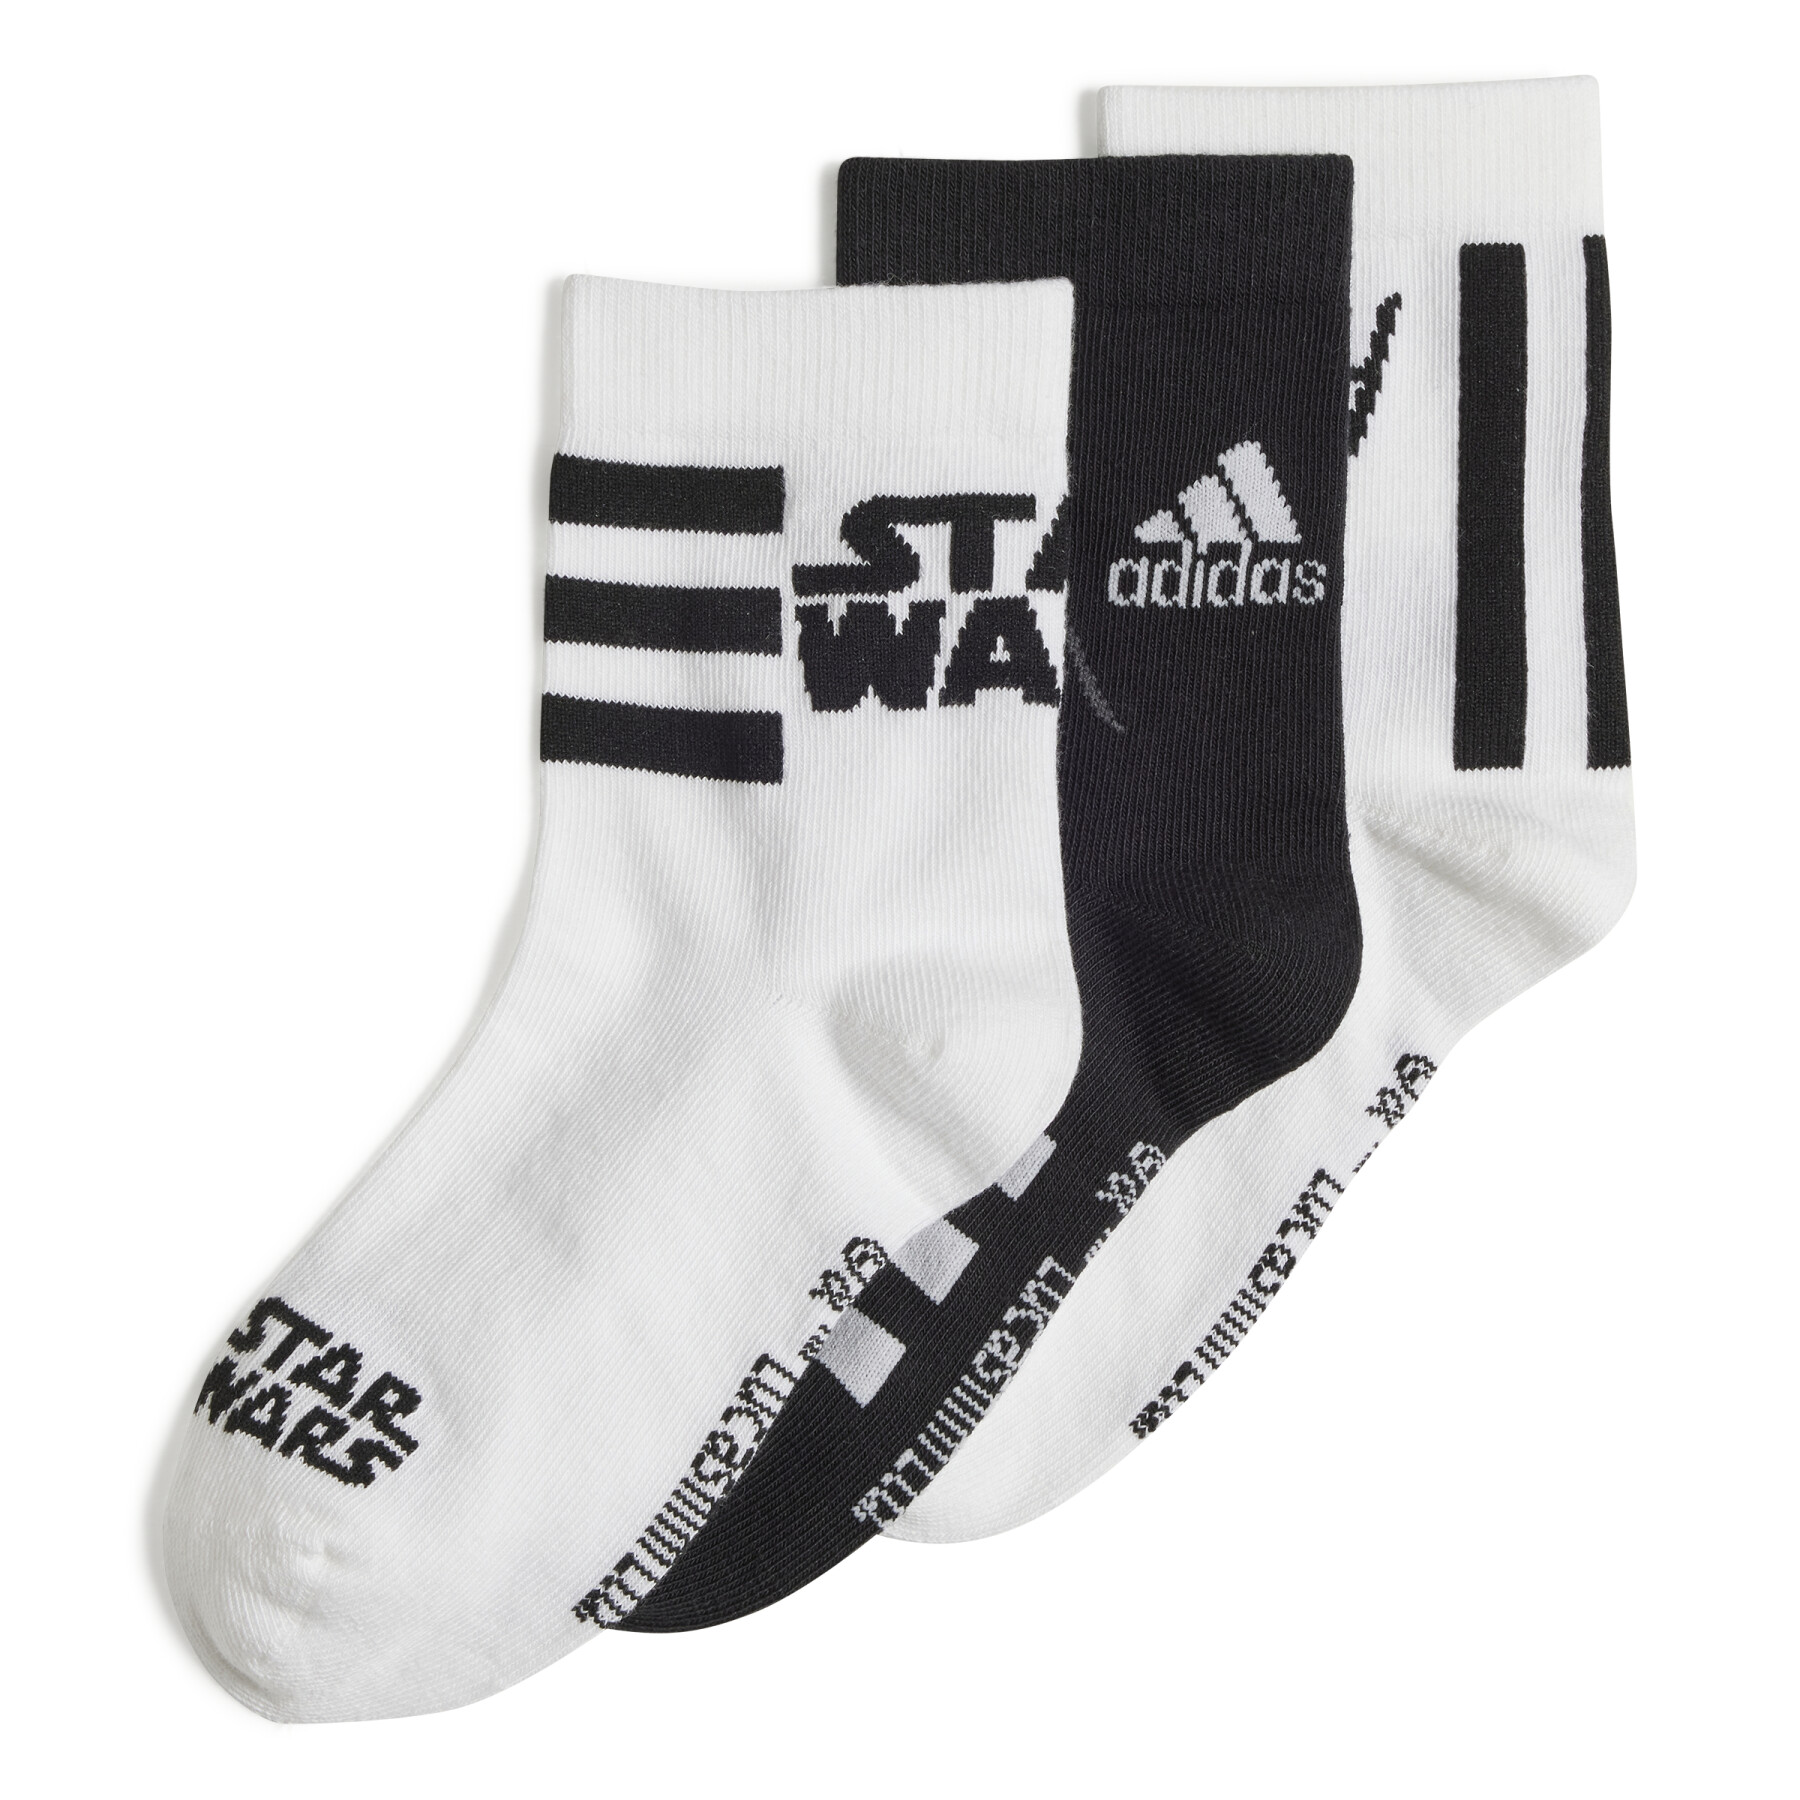 Meias adidas Star Wars (x3)